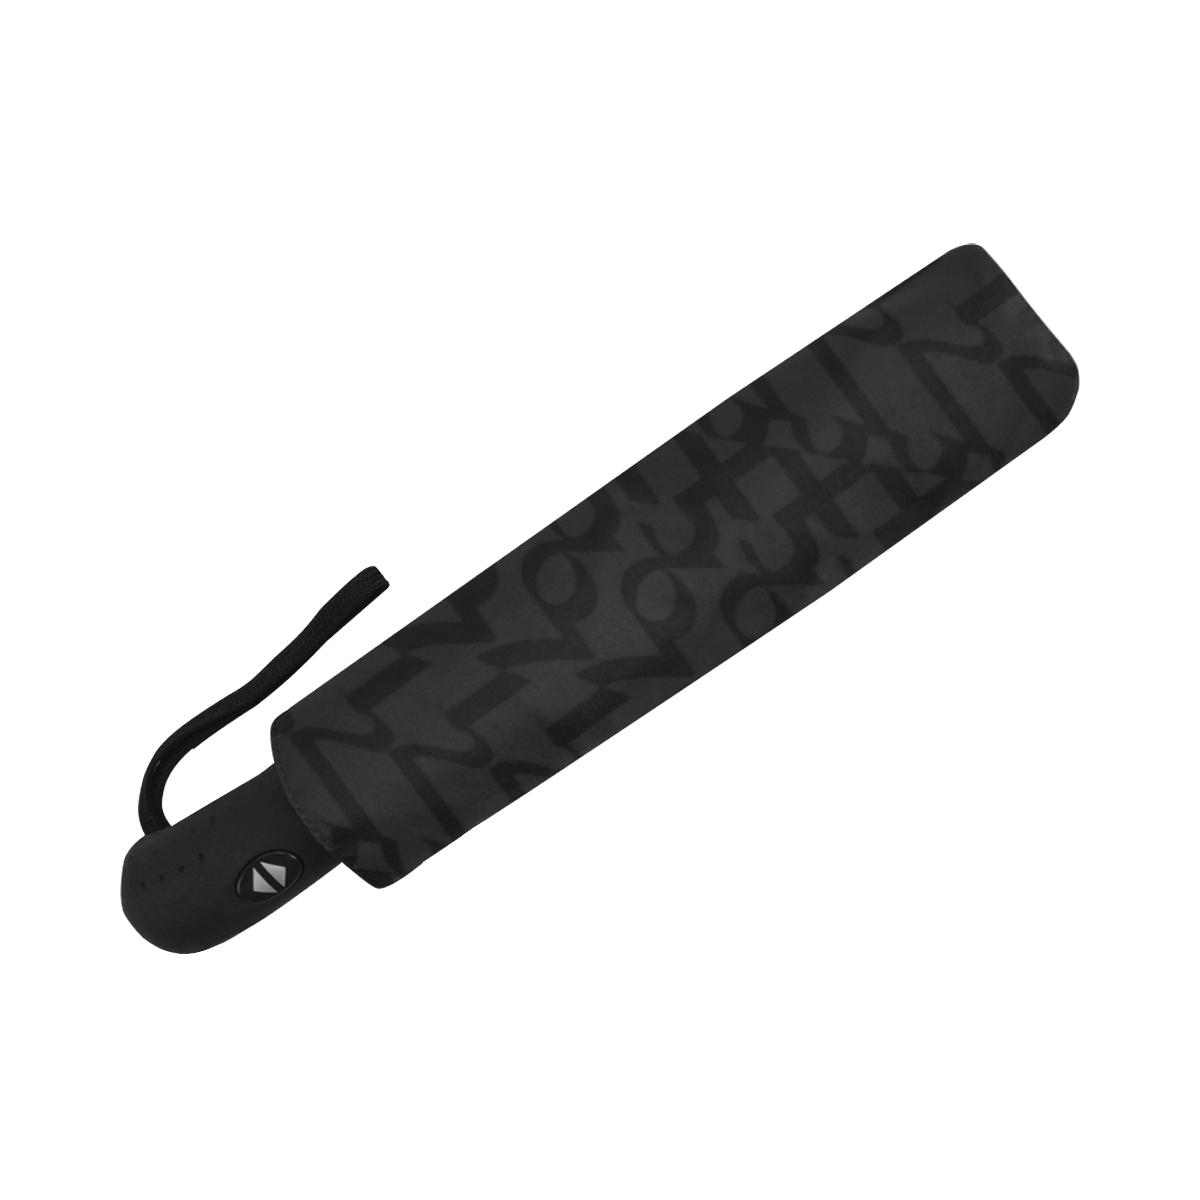 NUMBERS Collection 1234567 Matt/Black Anti-UV Auto-Foldable Umbrella (Underside Printing) (U06)